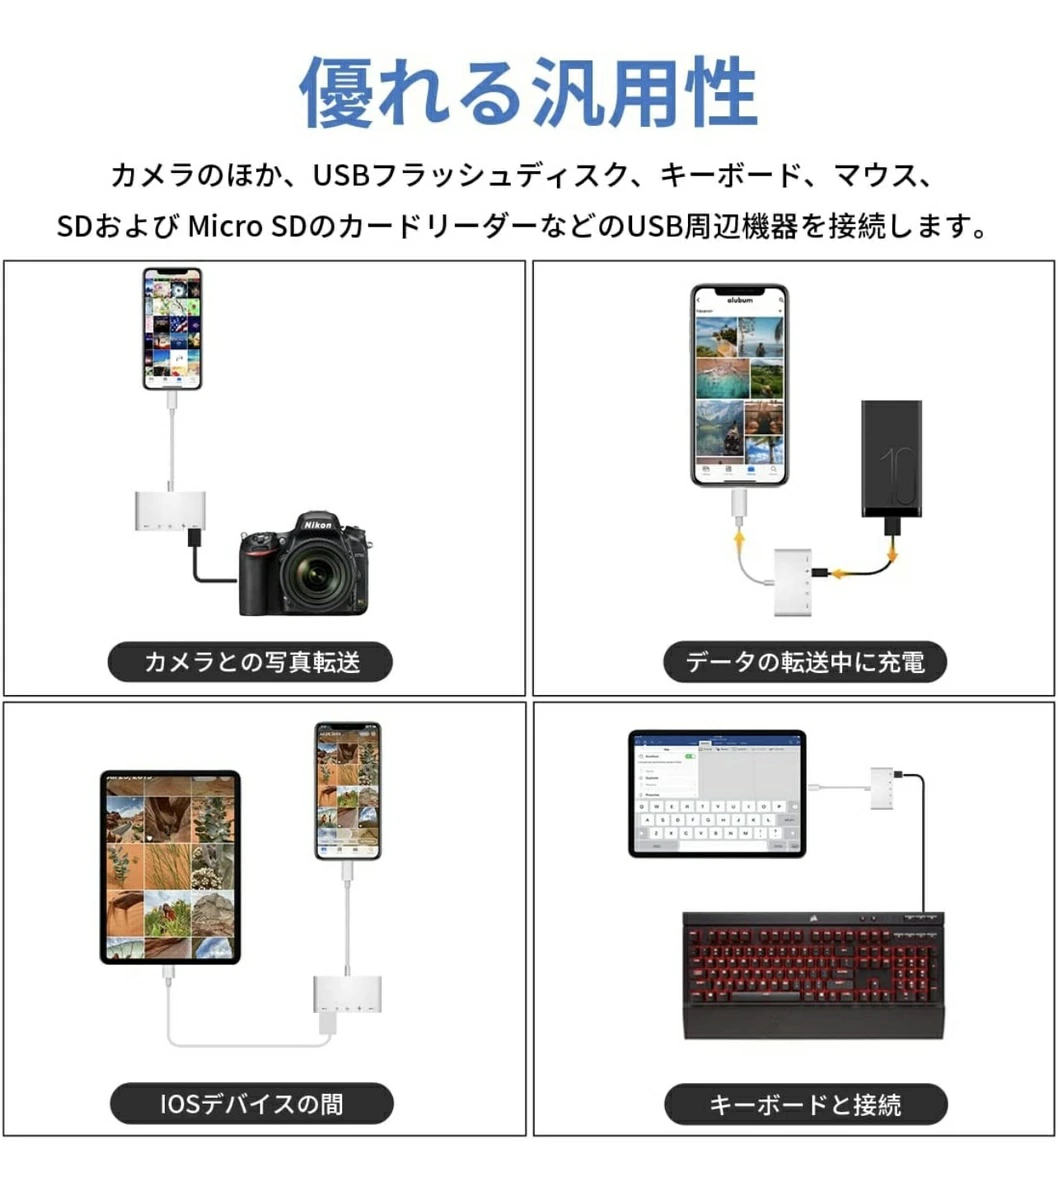 SD card reader 5in1 iphone card reader camera Leader microsd card reader USB micro sd card memory card micro sd iPad iOS exclusive use 